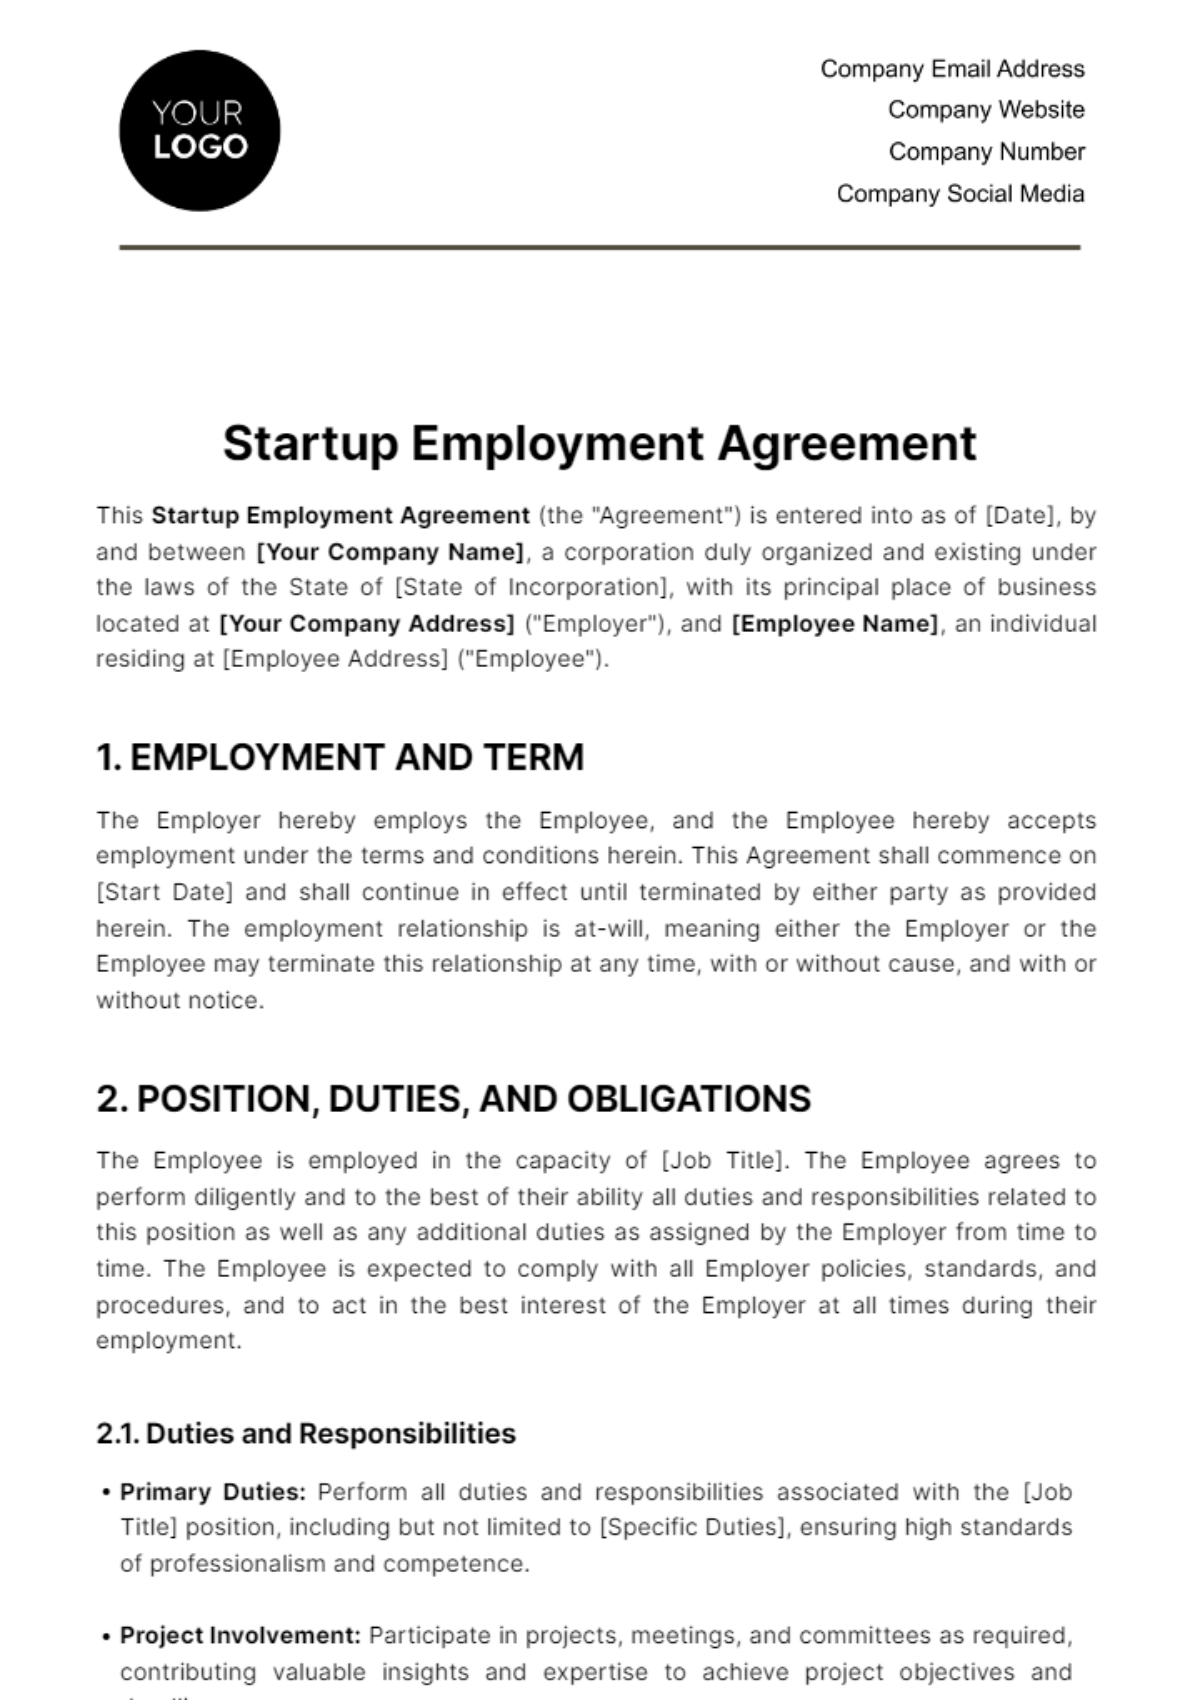 Startup Employment Agreement Template